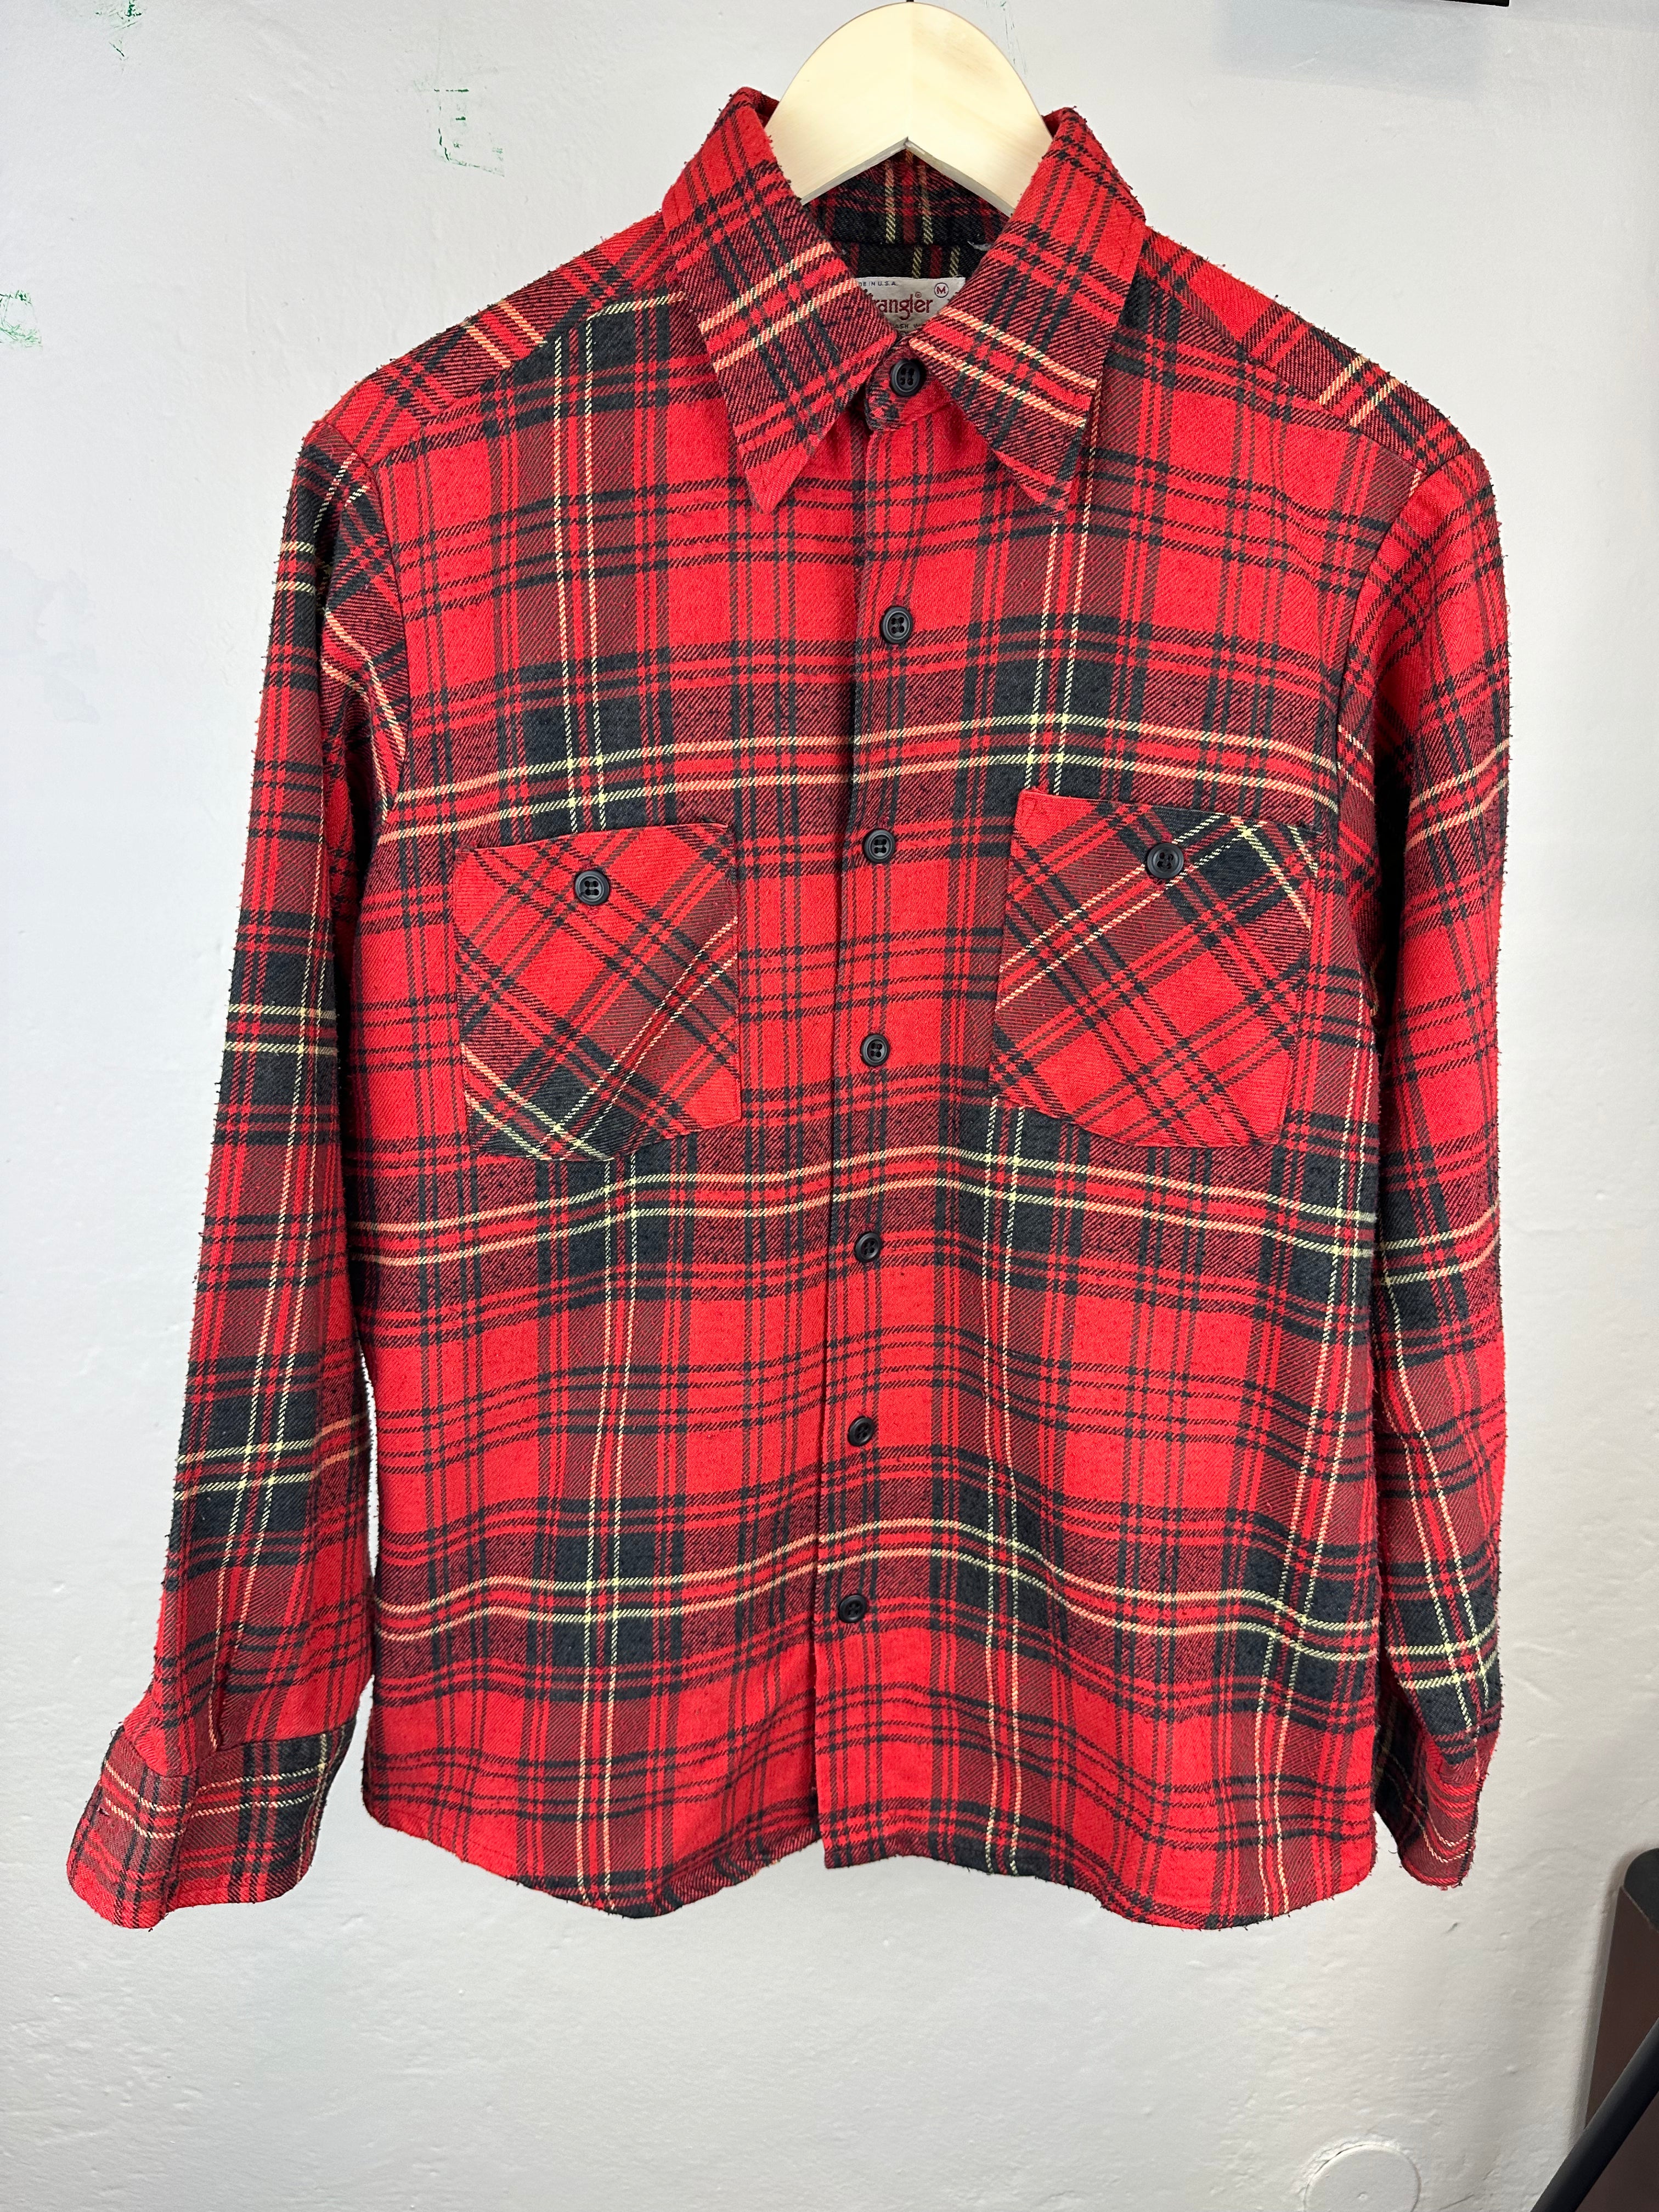 Vintage Wrangler 70s Flannel Shirt - size M